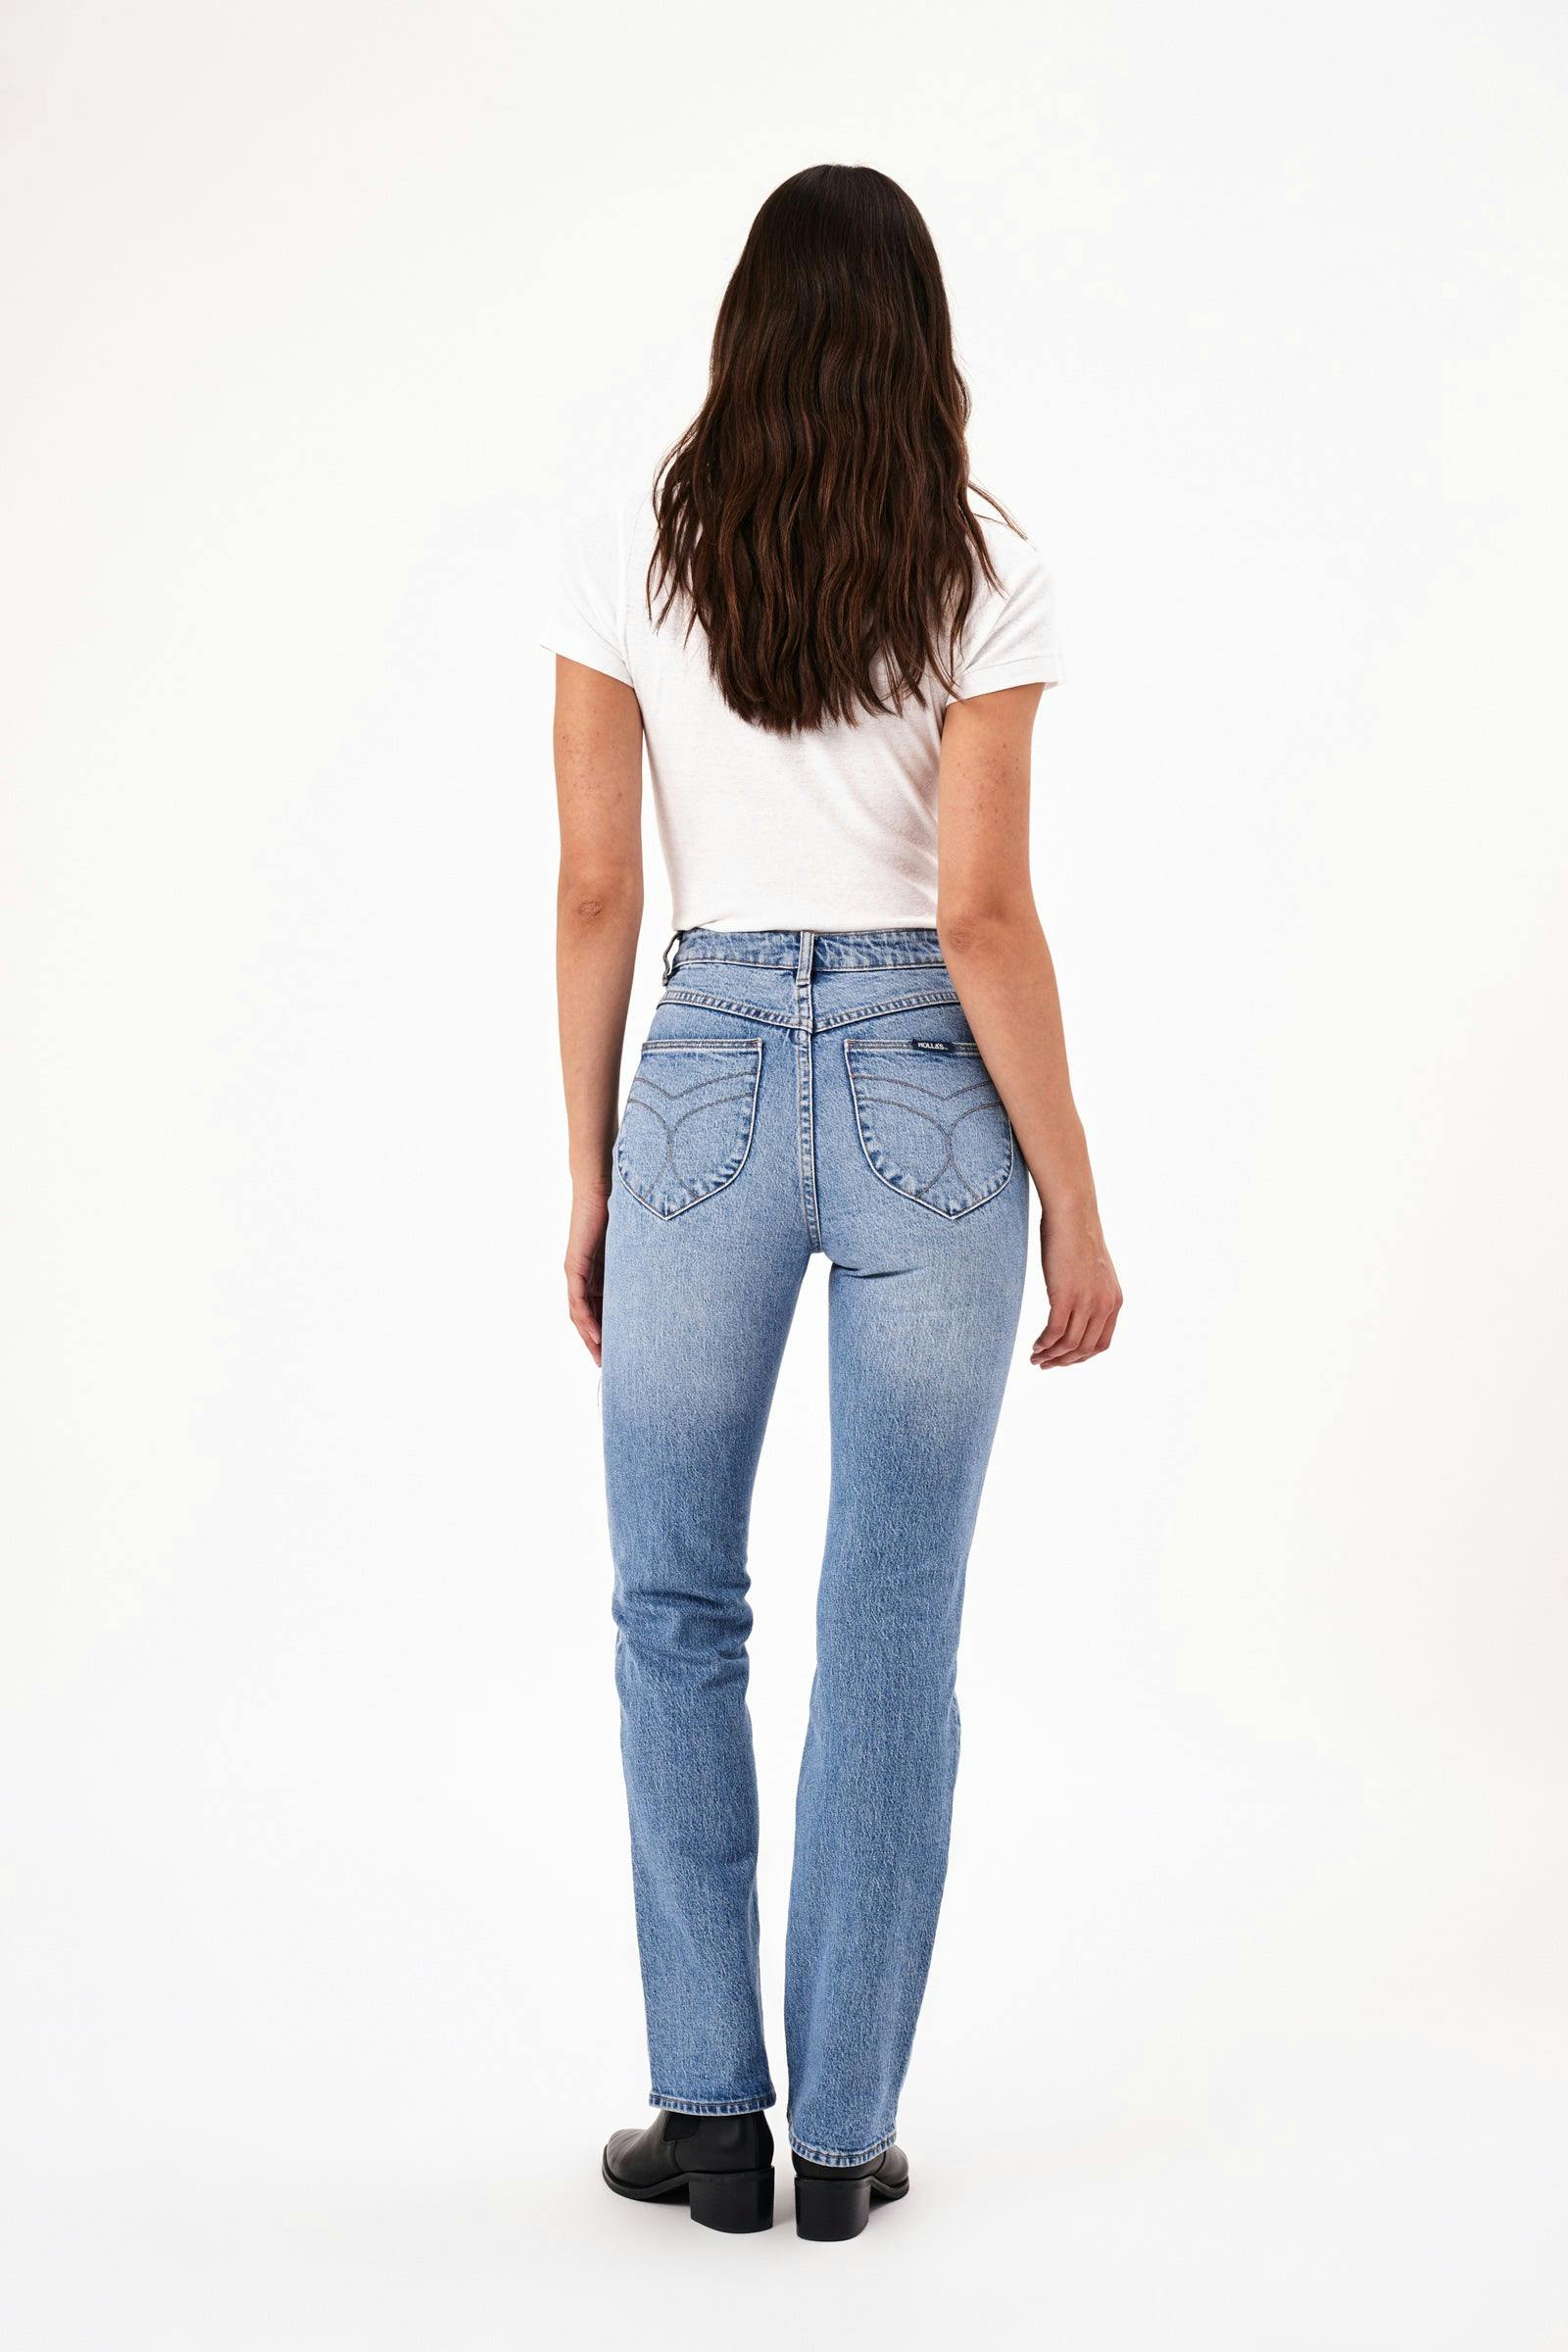 Buy Original Straight Long - Brad Blue Online | Rollas Jeans